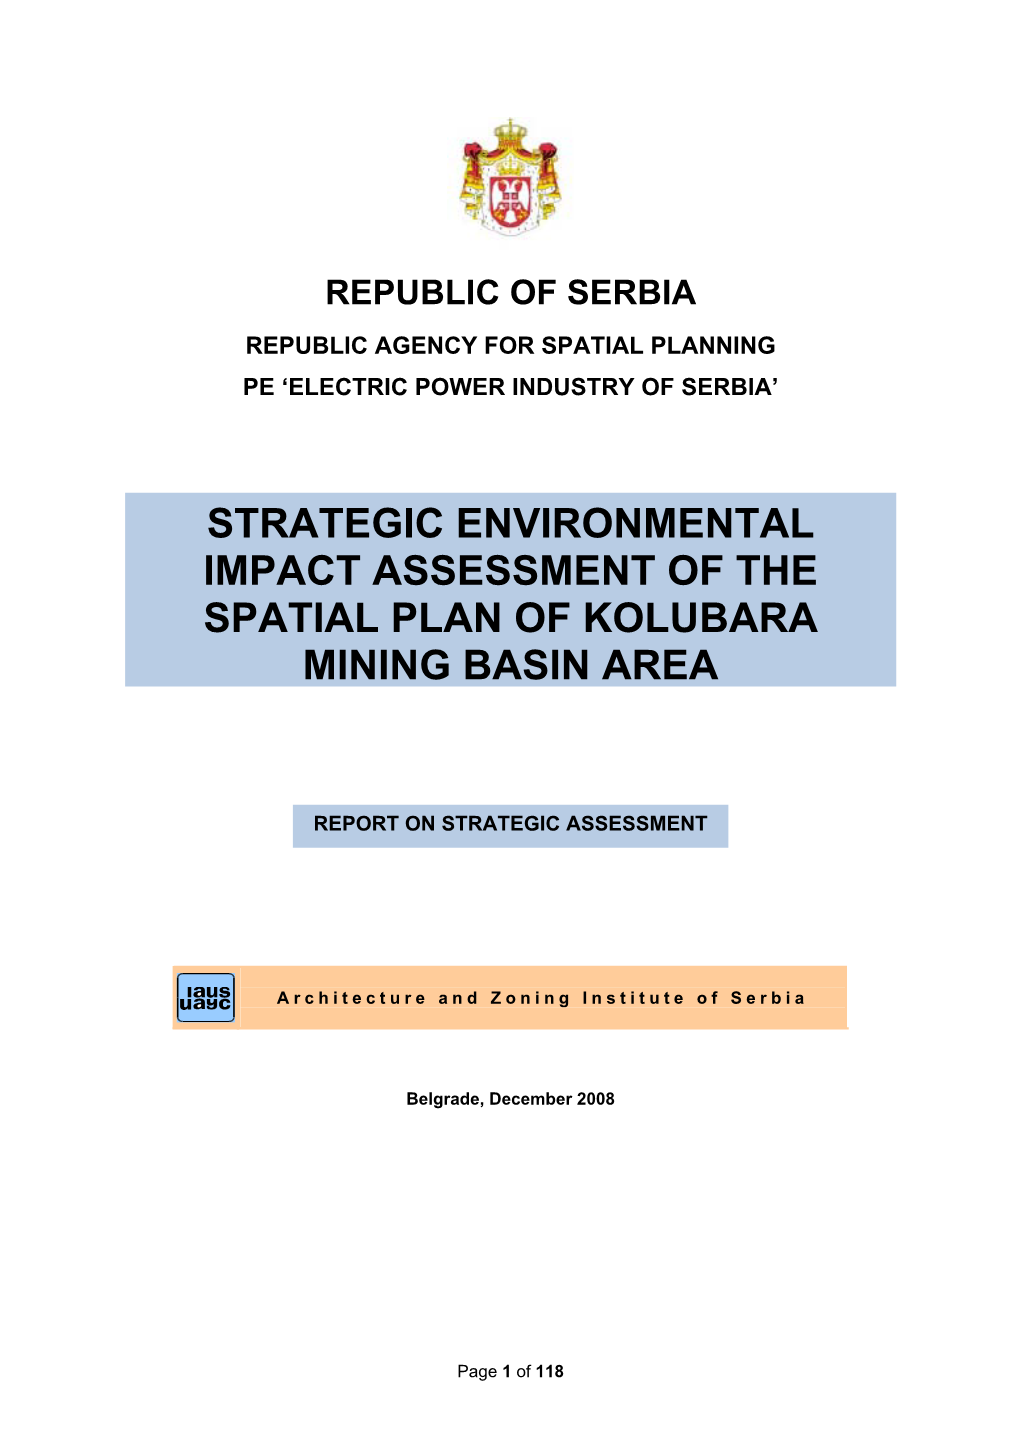 Strategic Environmental Impact Assessment of the Spatial Plan of Kolubara